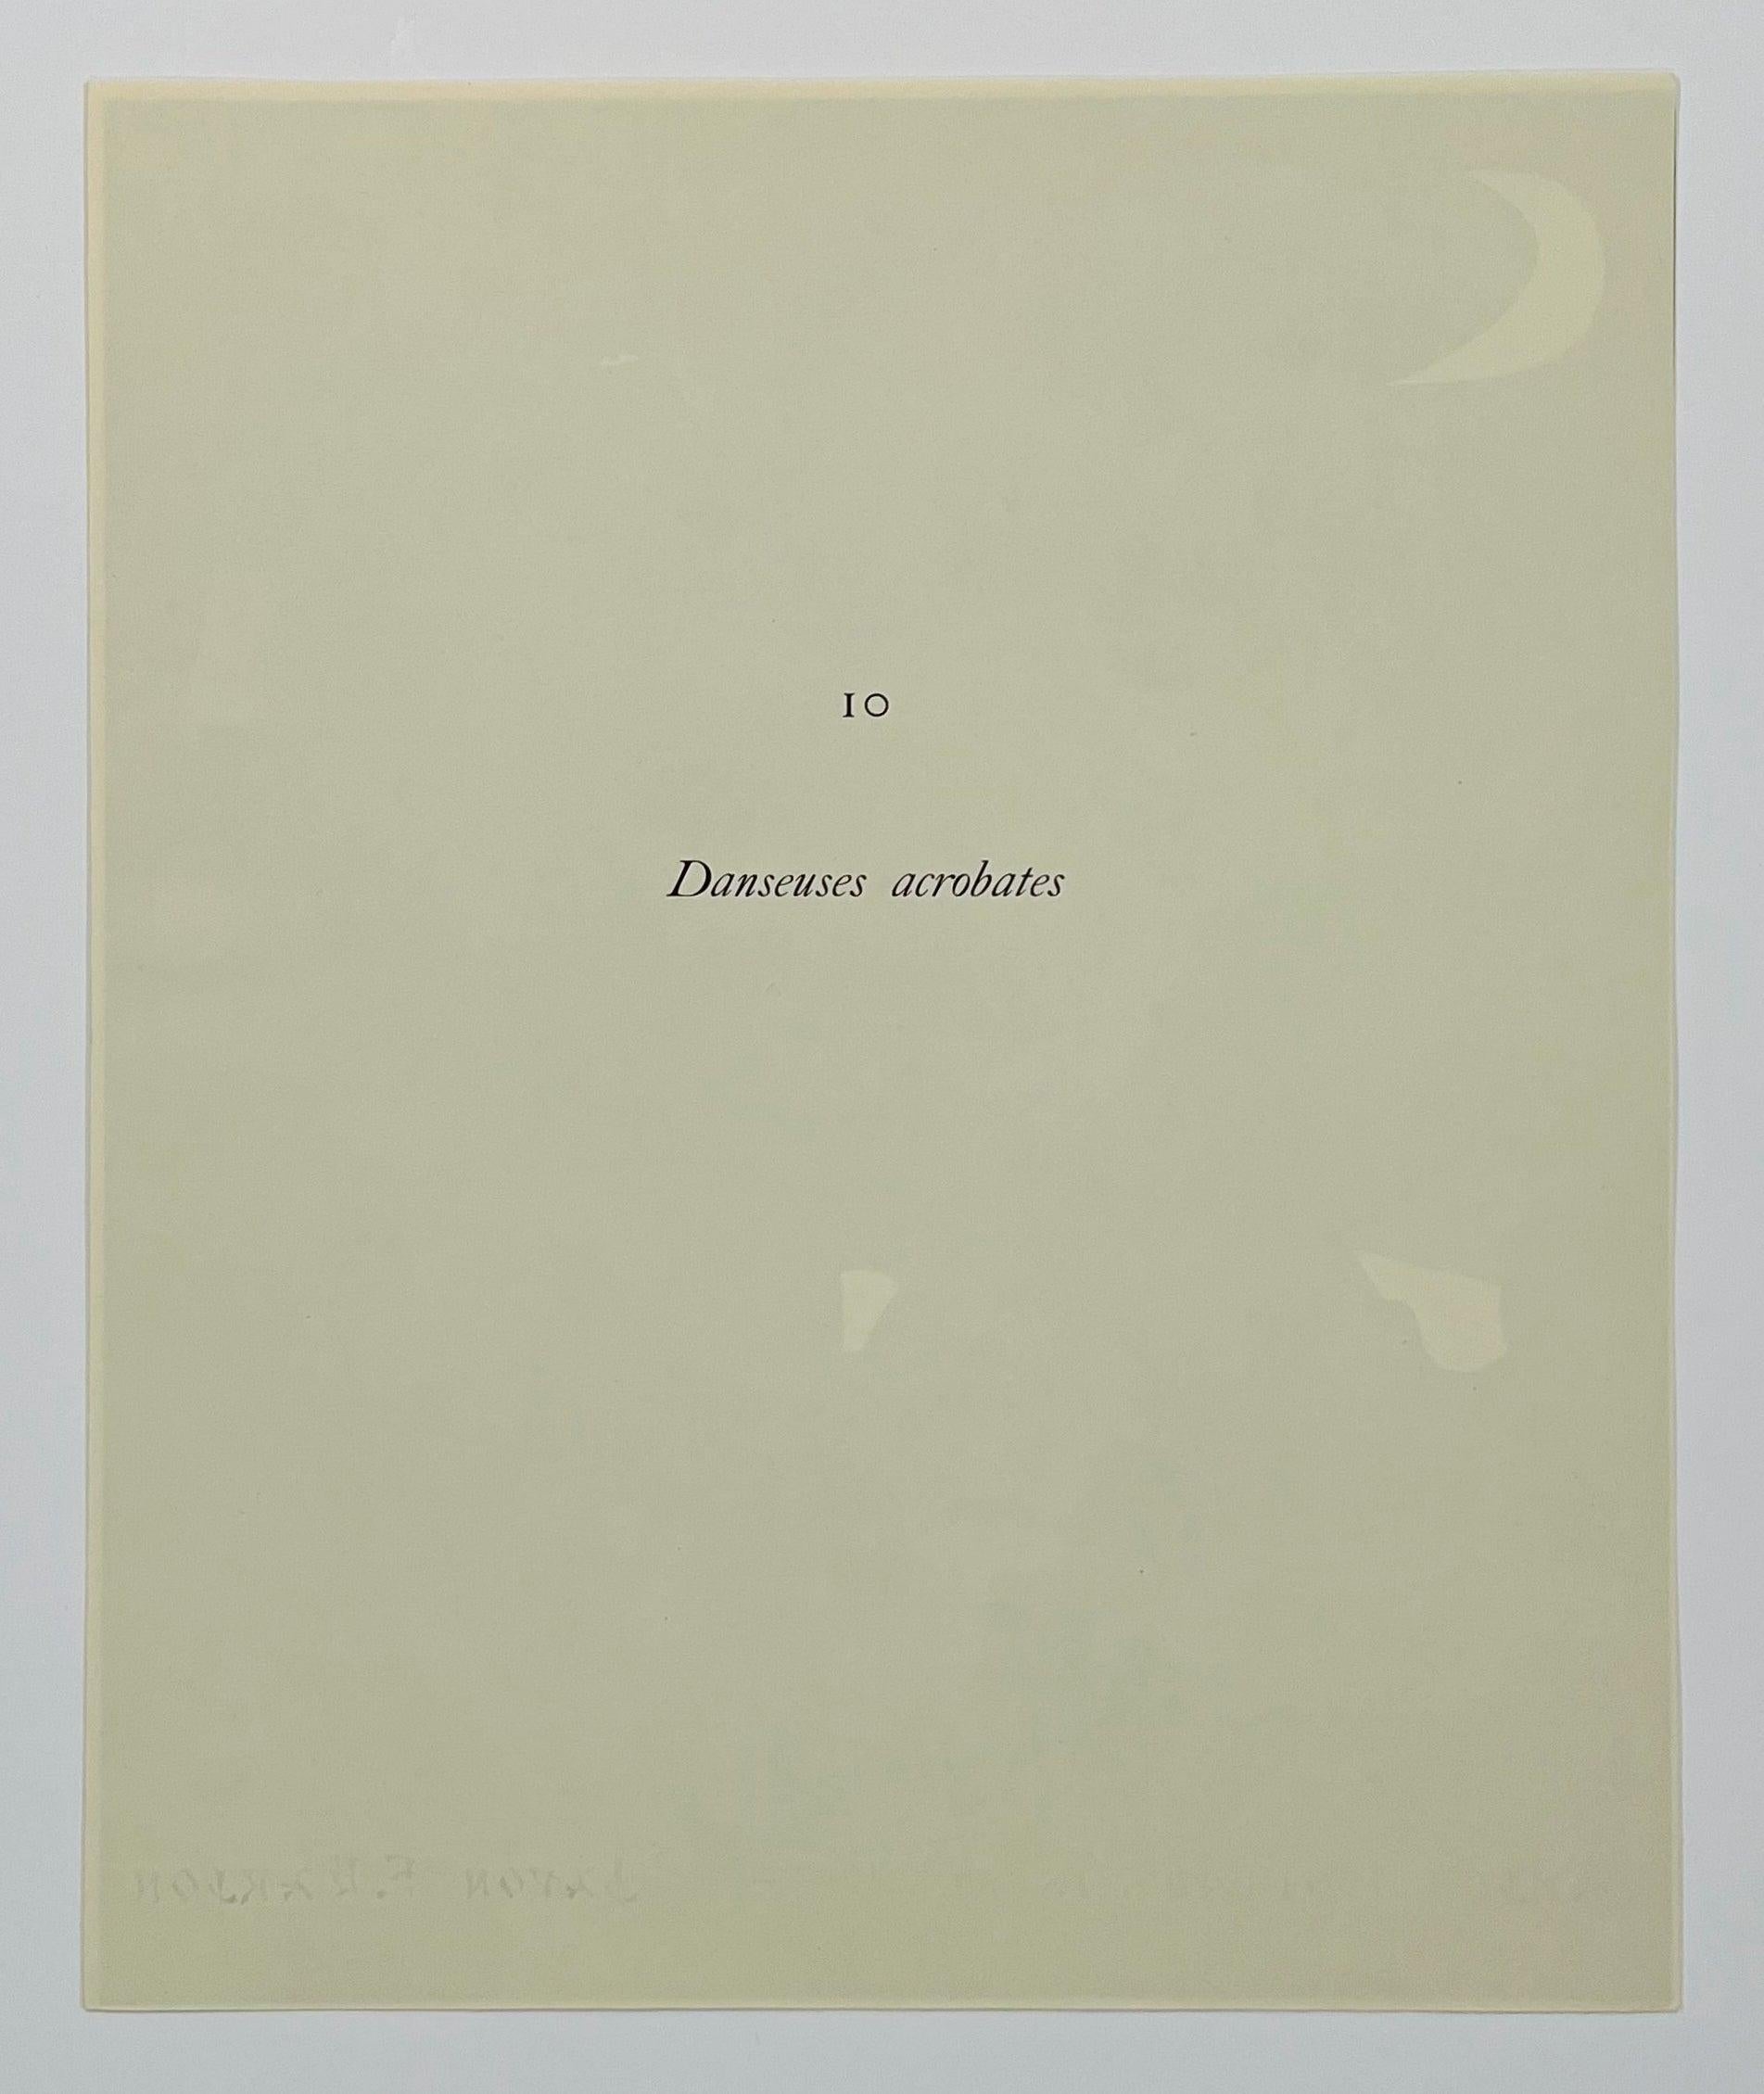 Artist: Joan Miro (after)
Title: Danseuses acrobates (Acrobatic Dancers), Plate X
Portfolio: 1959 Constellations
Medium: Original pochoir
Date: 1959
Edition: 350
Sheet Size: 17